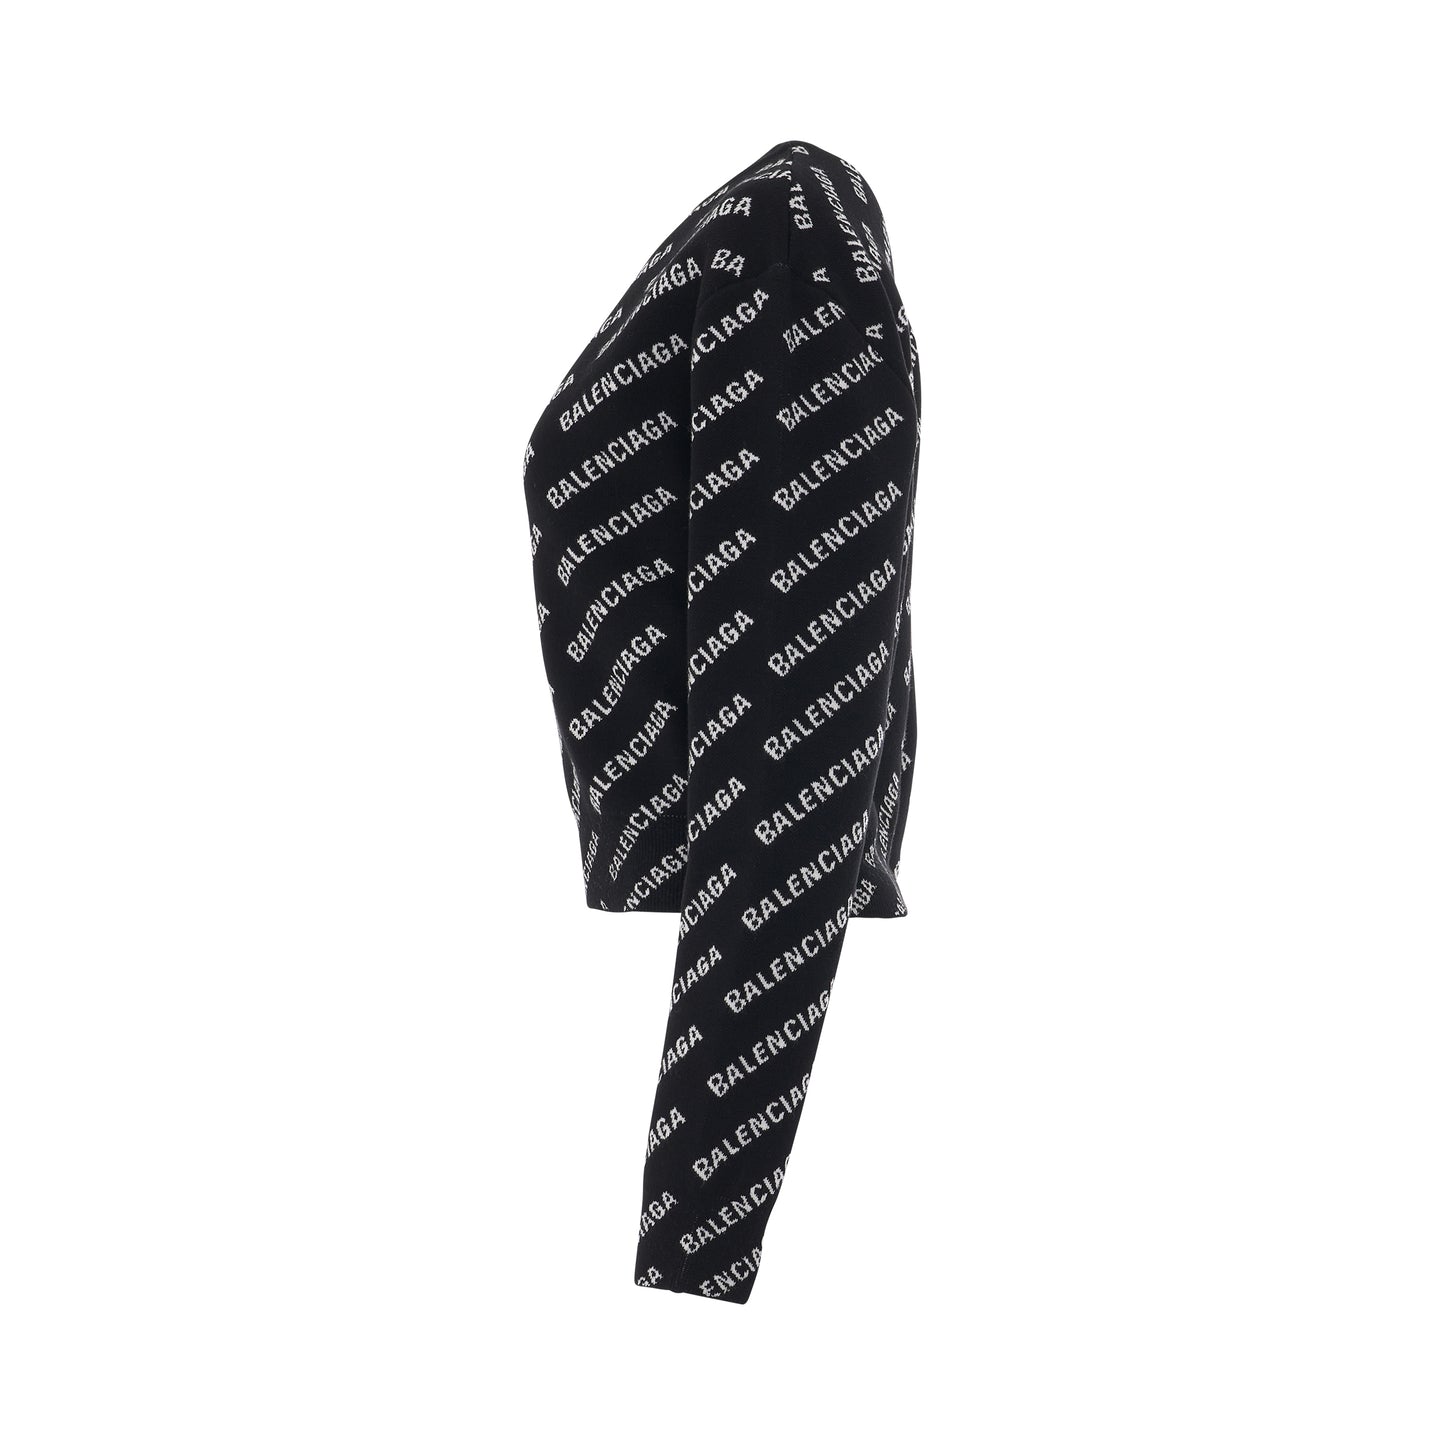 Mini Allover Logo Knit Sweater Black/White